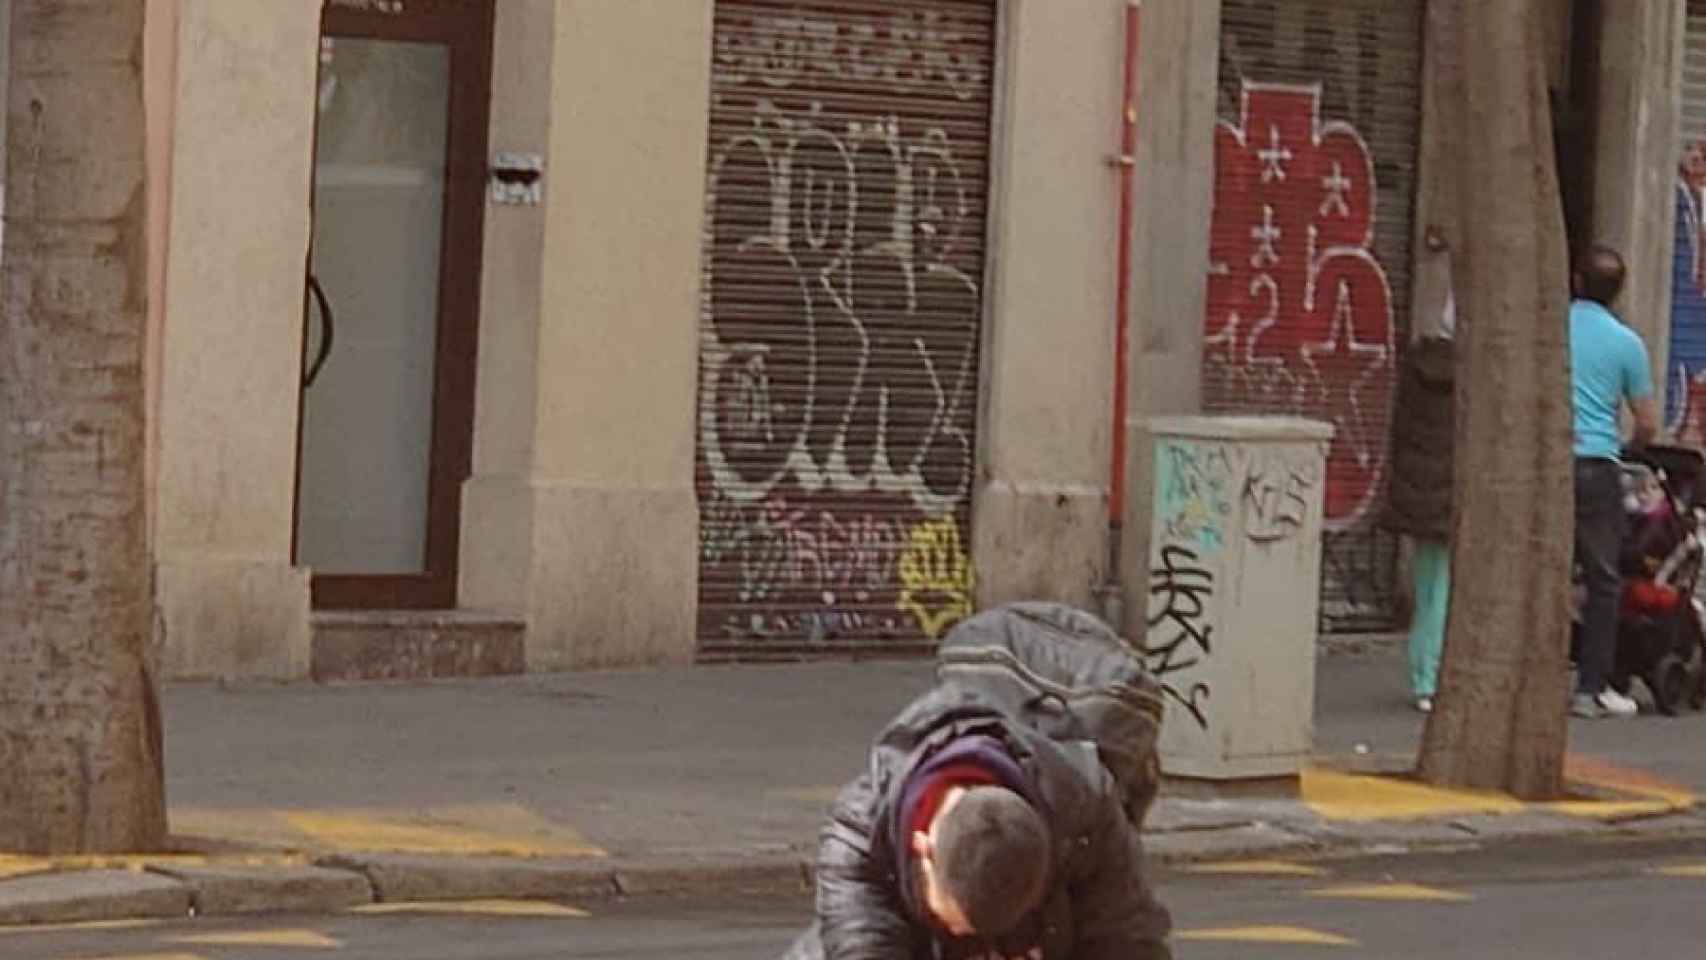 Un hombre se inyecta droga en el barrio de Sant Antoni / SANT ANTONI VIGILA